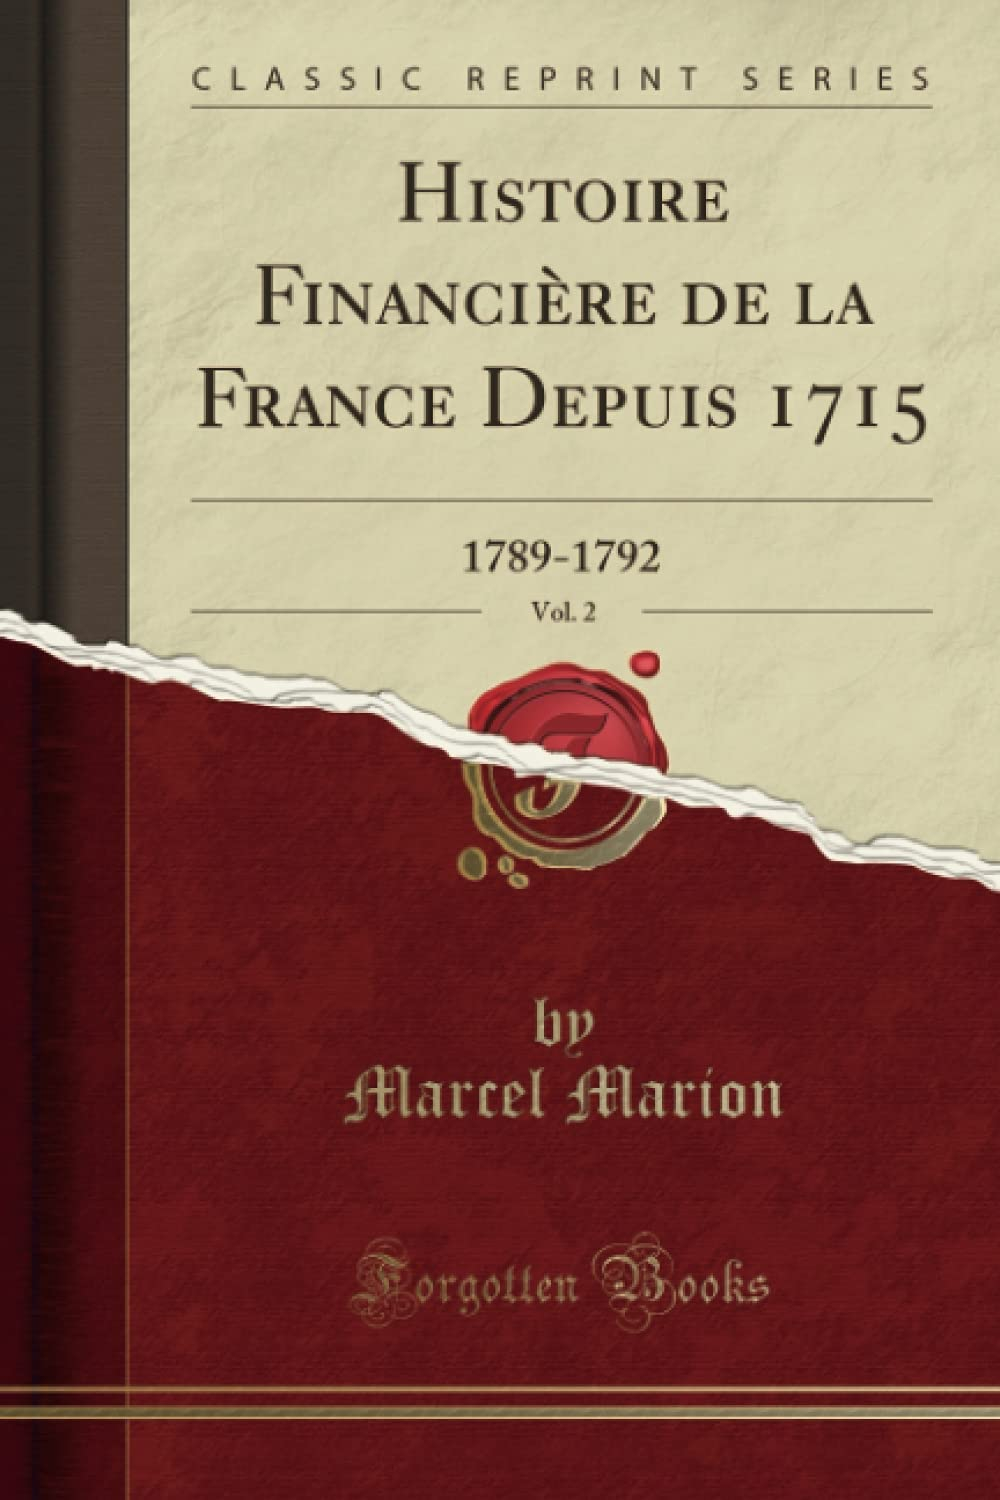 Histoire Financière de la France Depuis 1715, Vol. 2 (Classic Reprint): 1789-1792